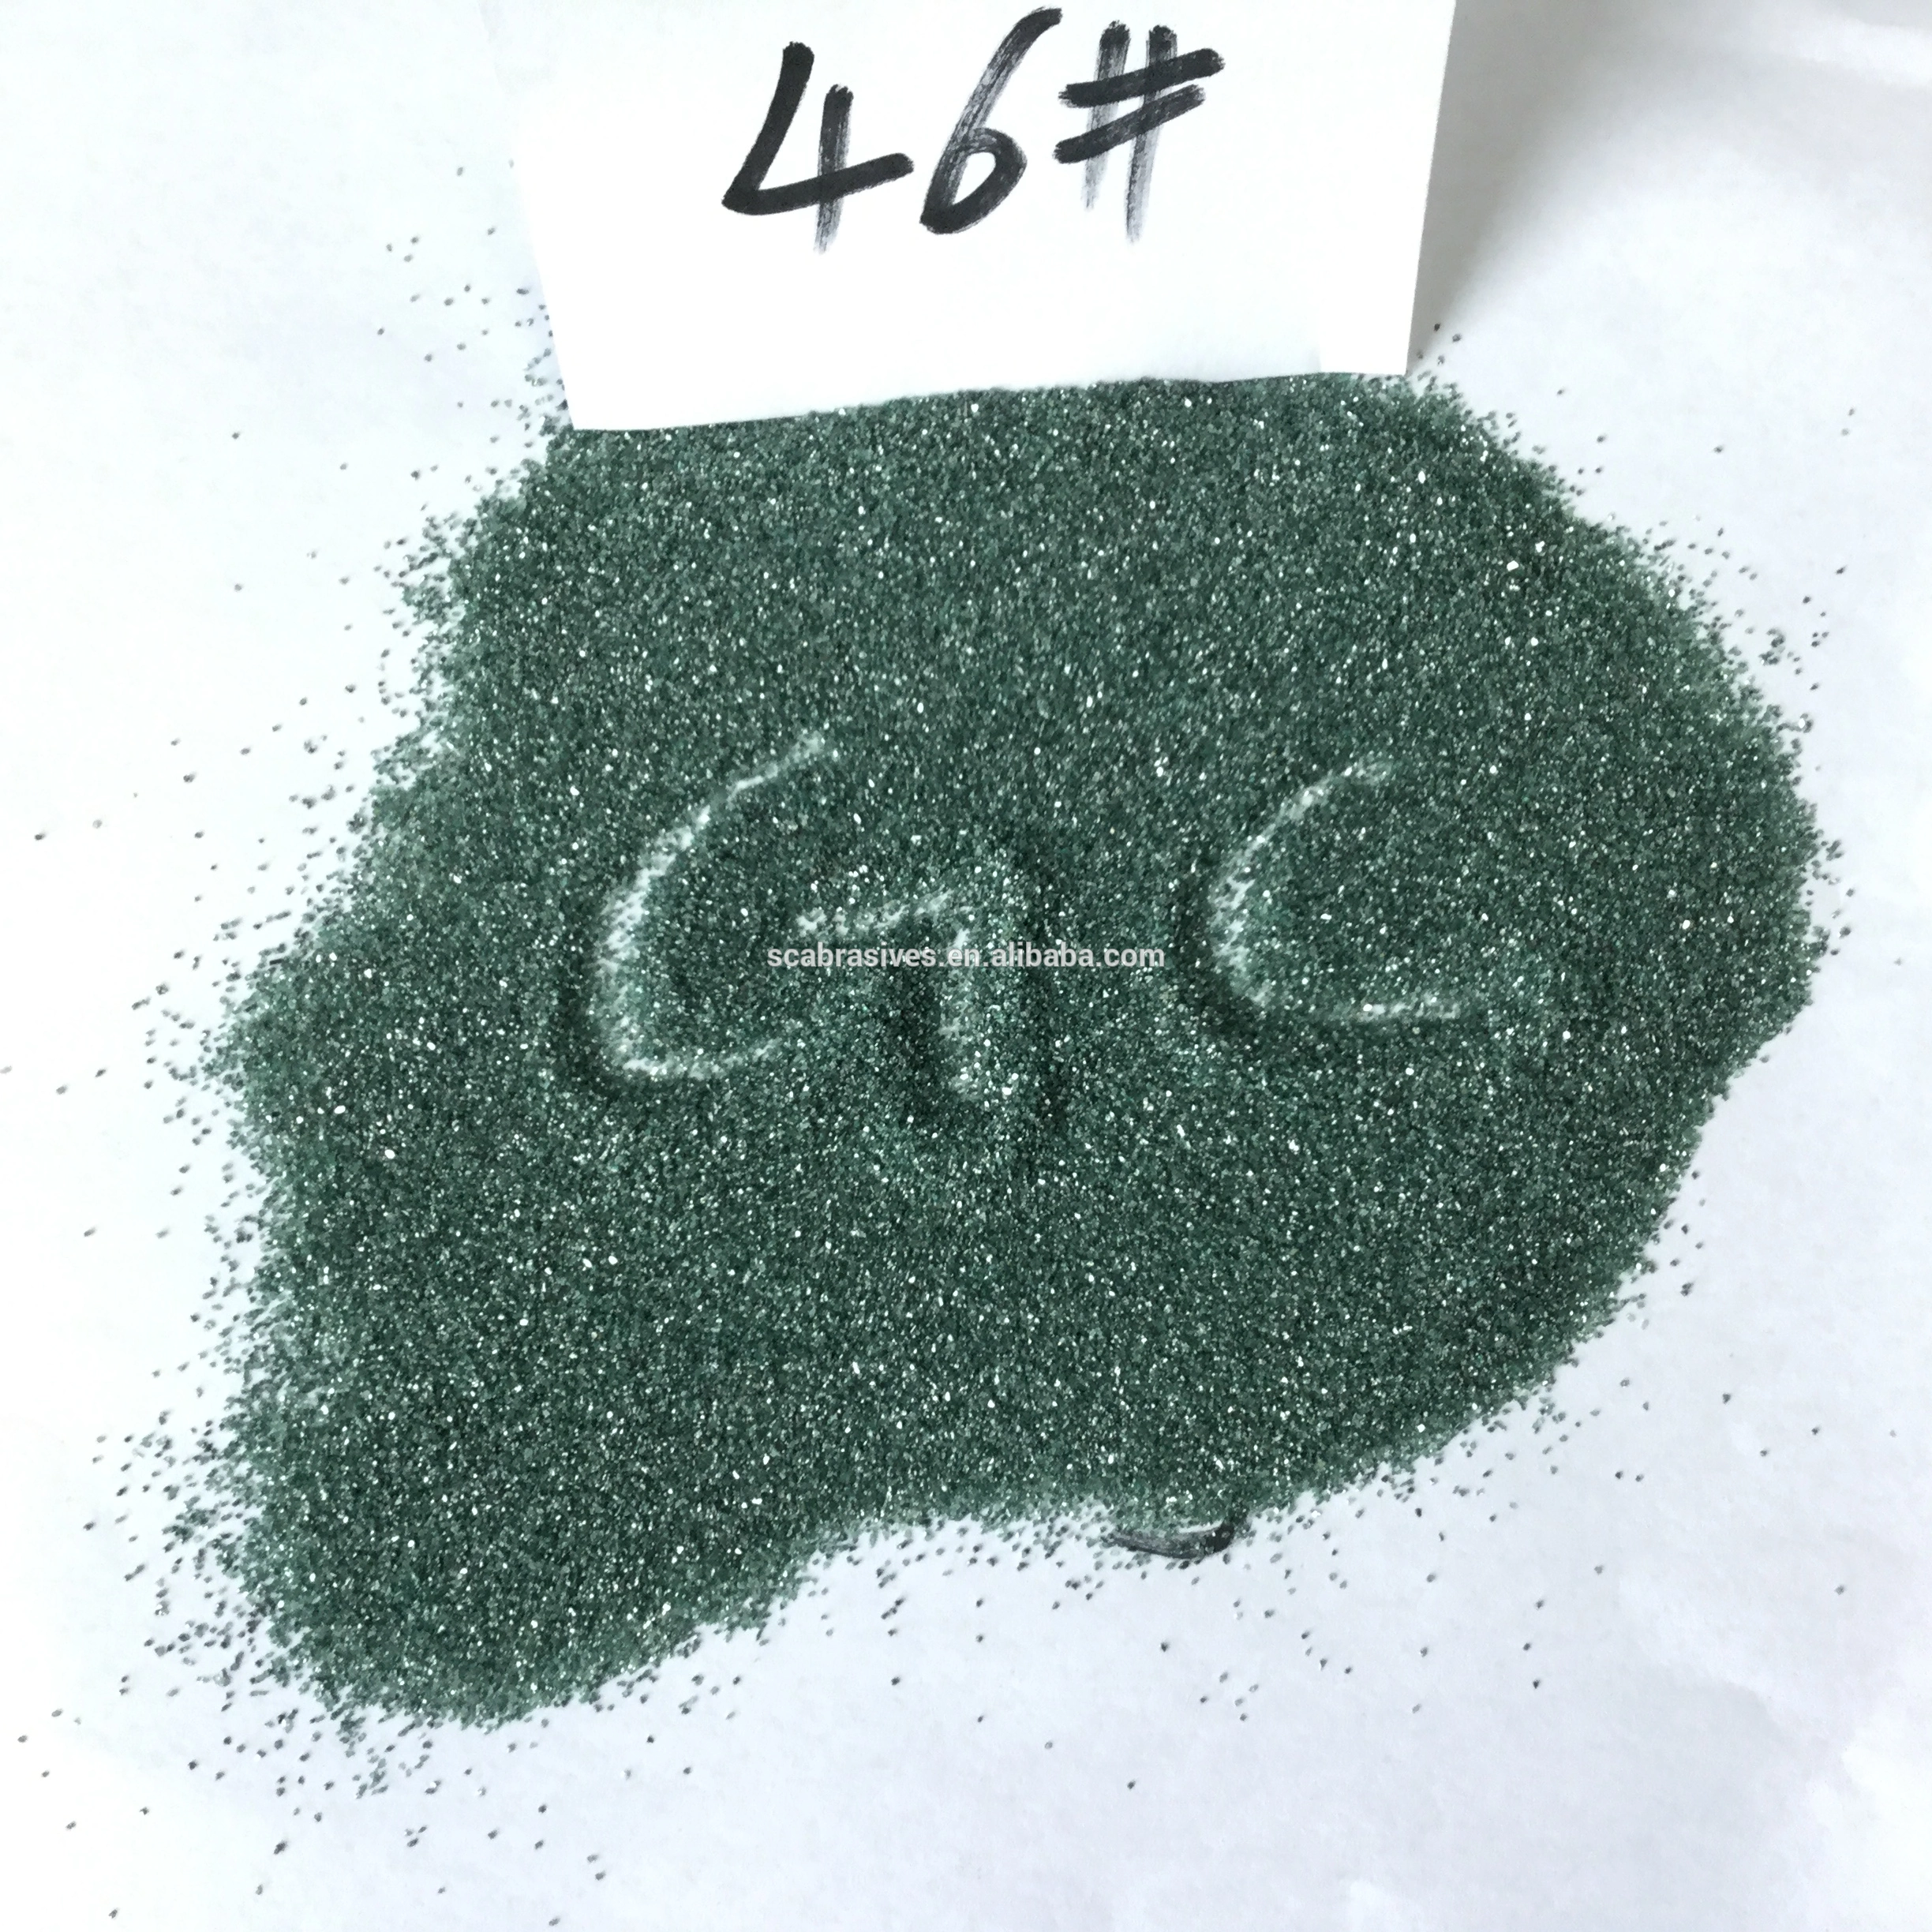 Quartz glass surface finishing materials green silicon carbide/carborundum/GC